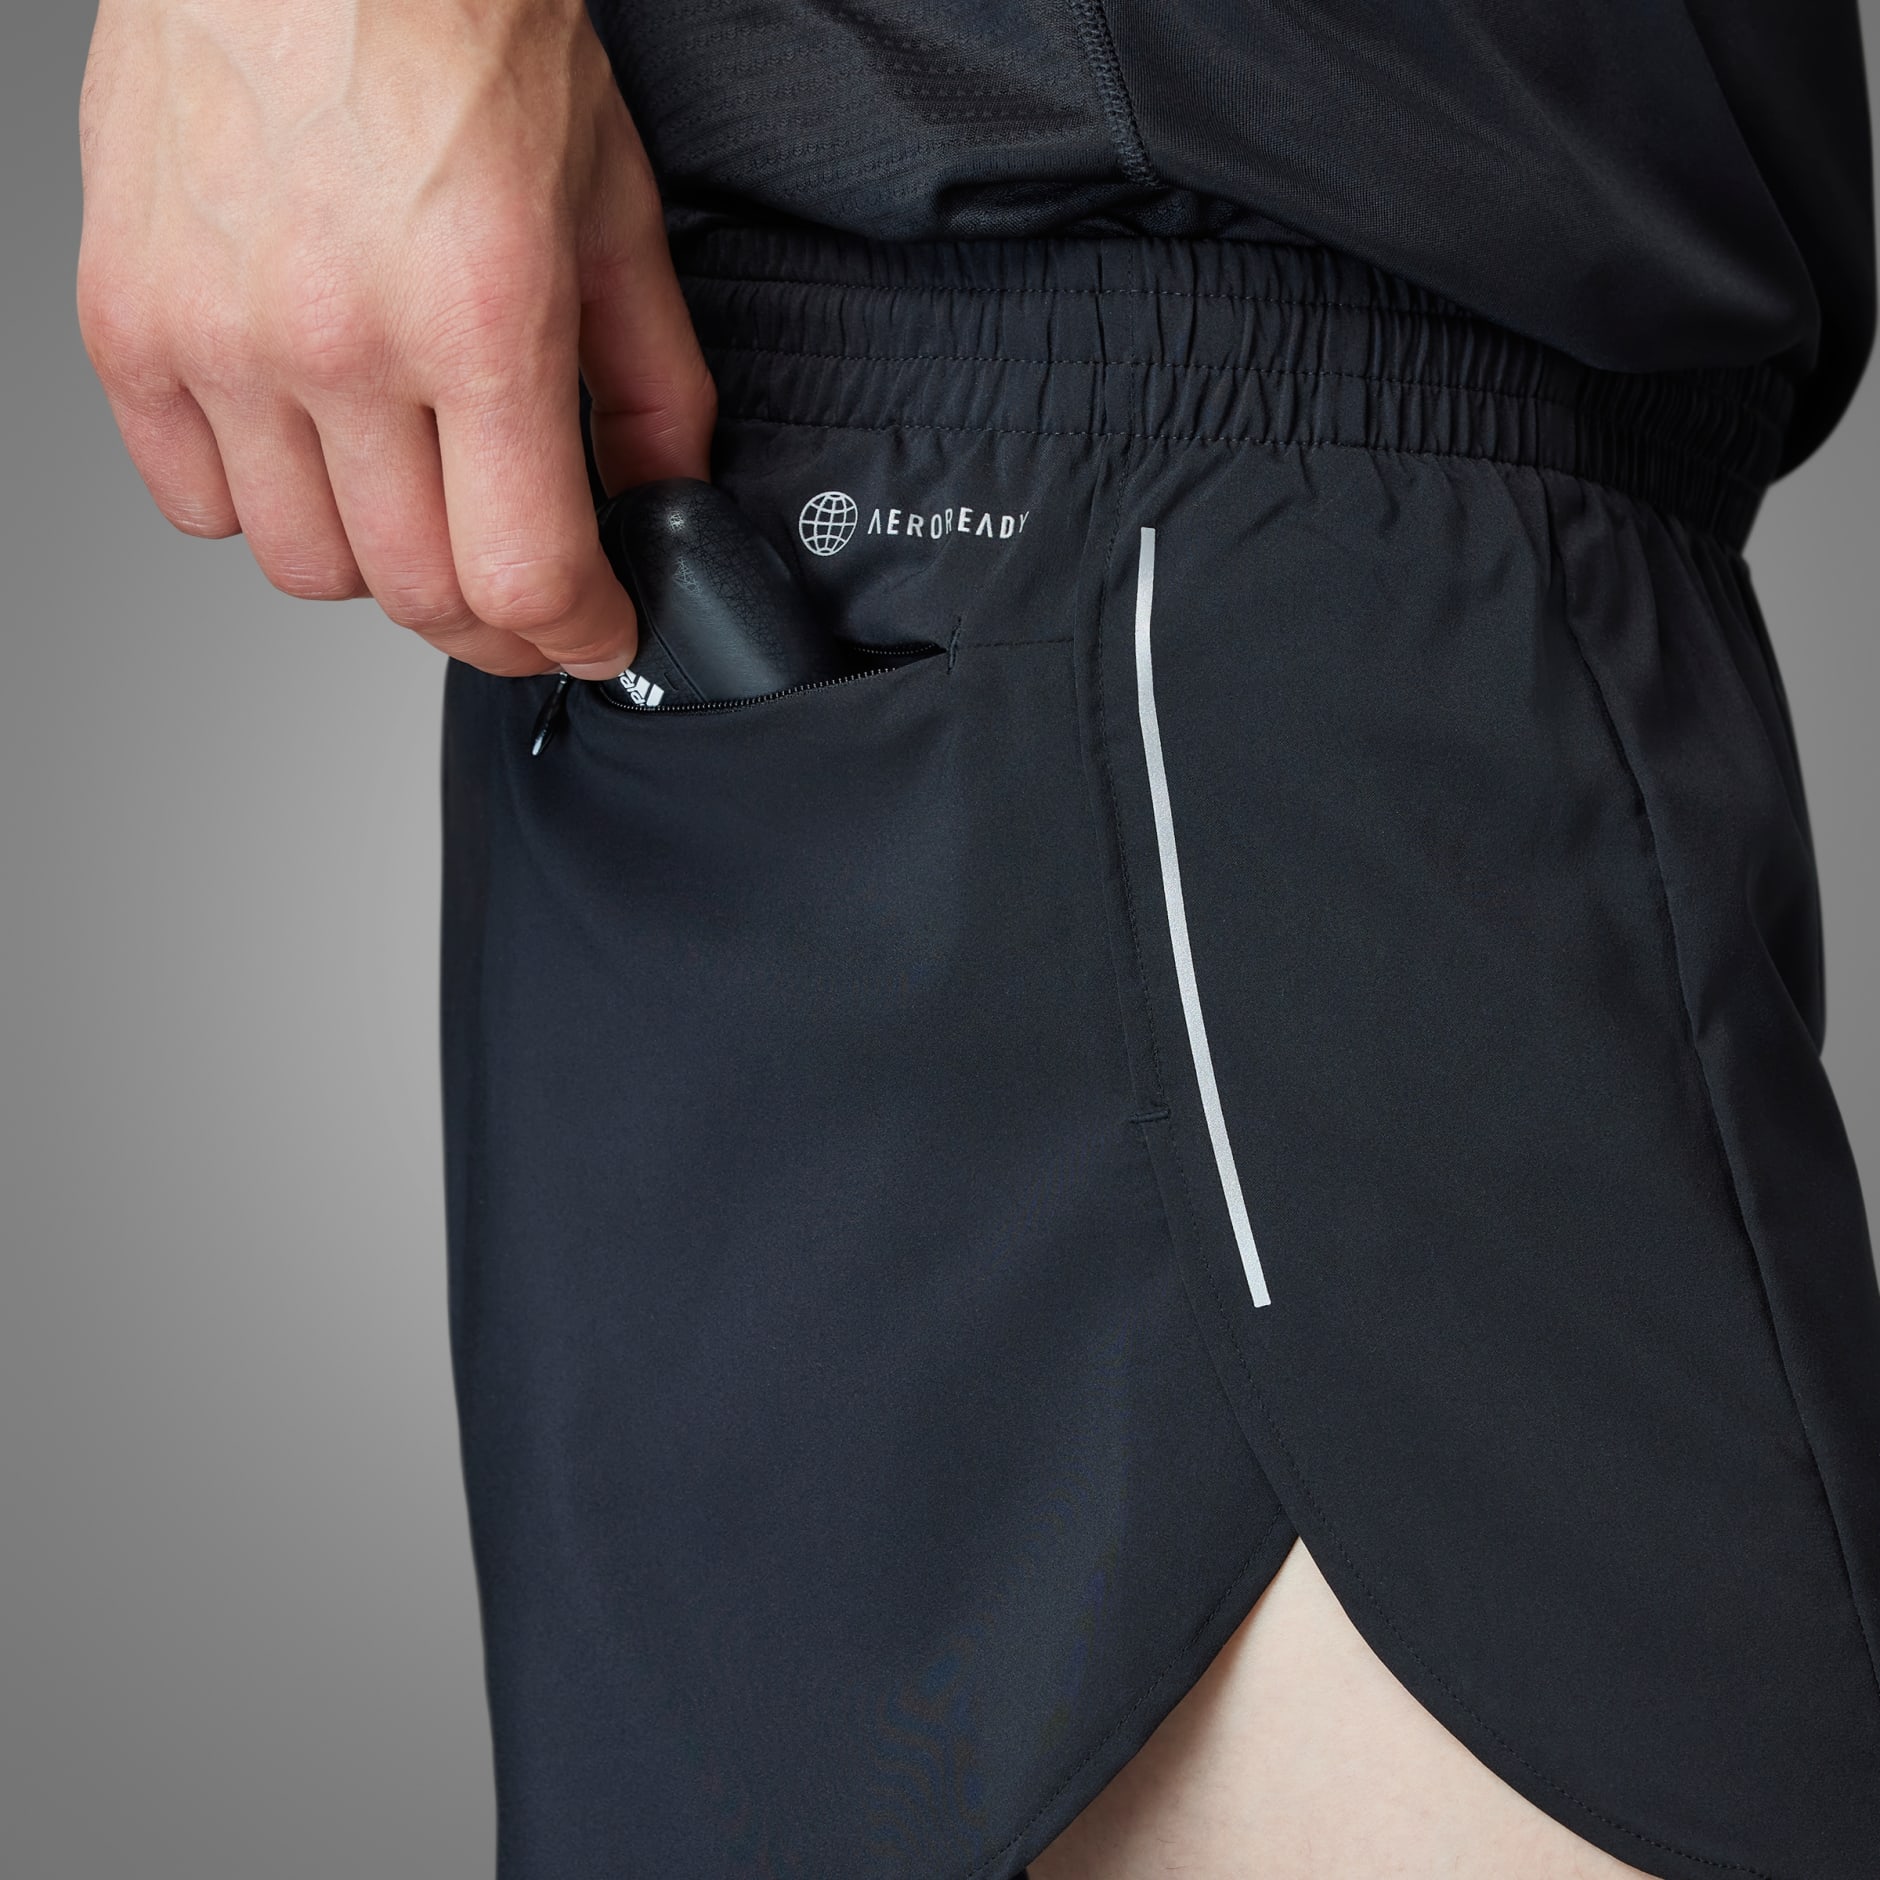 adidas Men's Own The Run Split Shorts, Black/Reflective Silver, XX